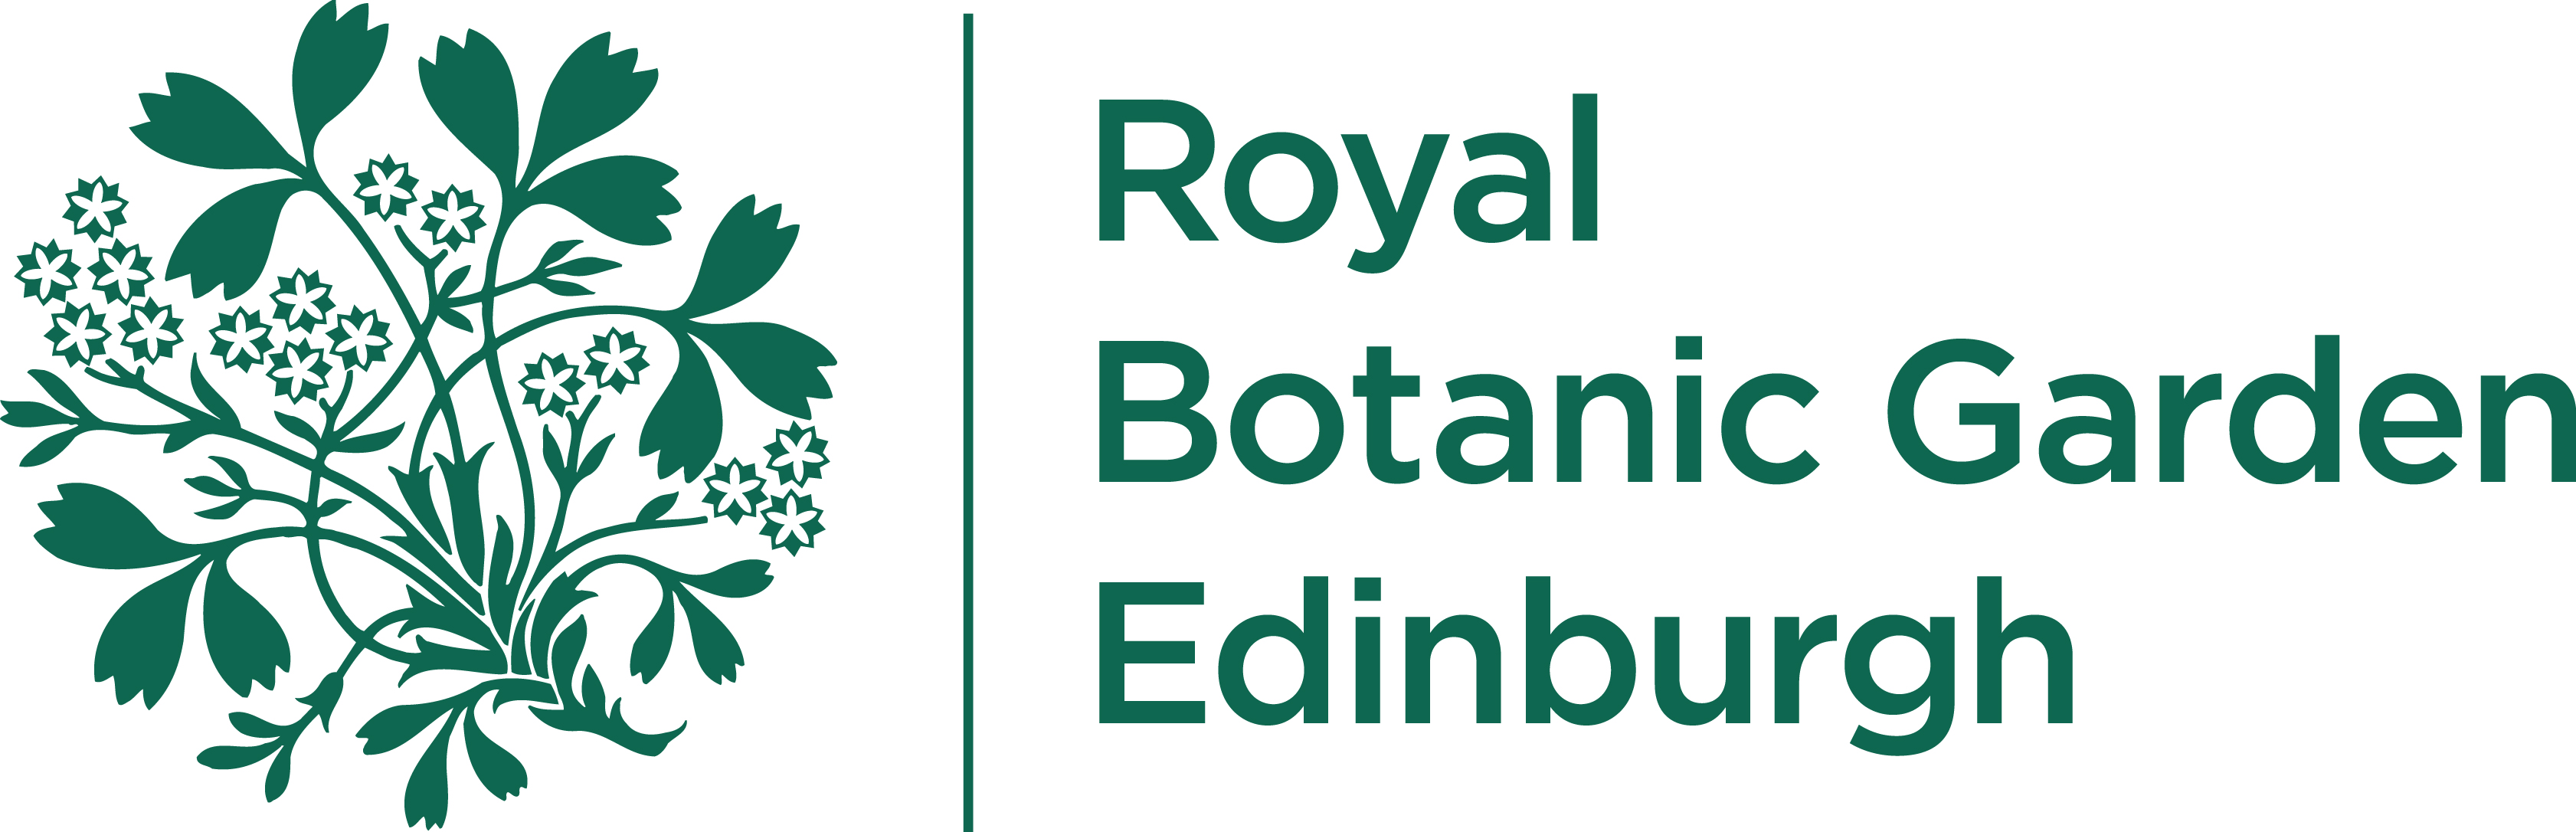 Royal Botanic Gardens of Edinburgh